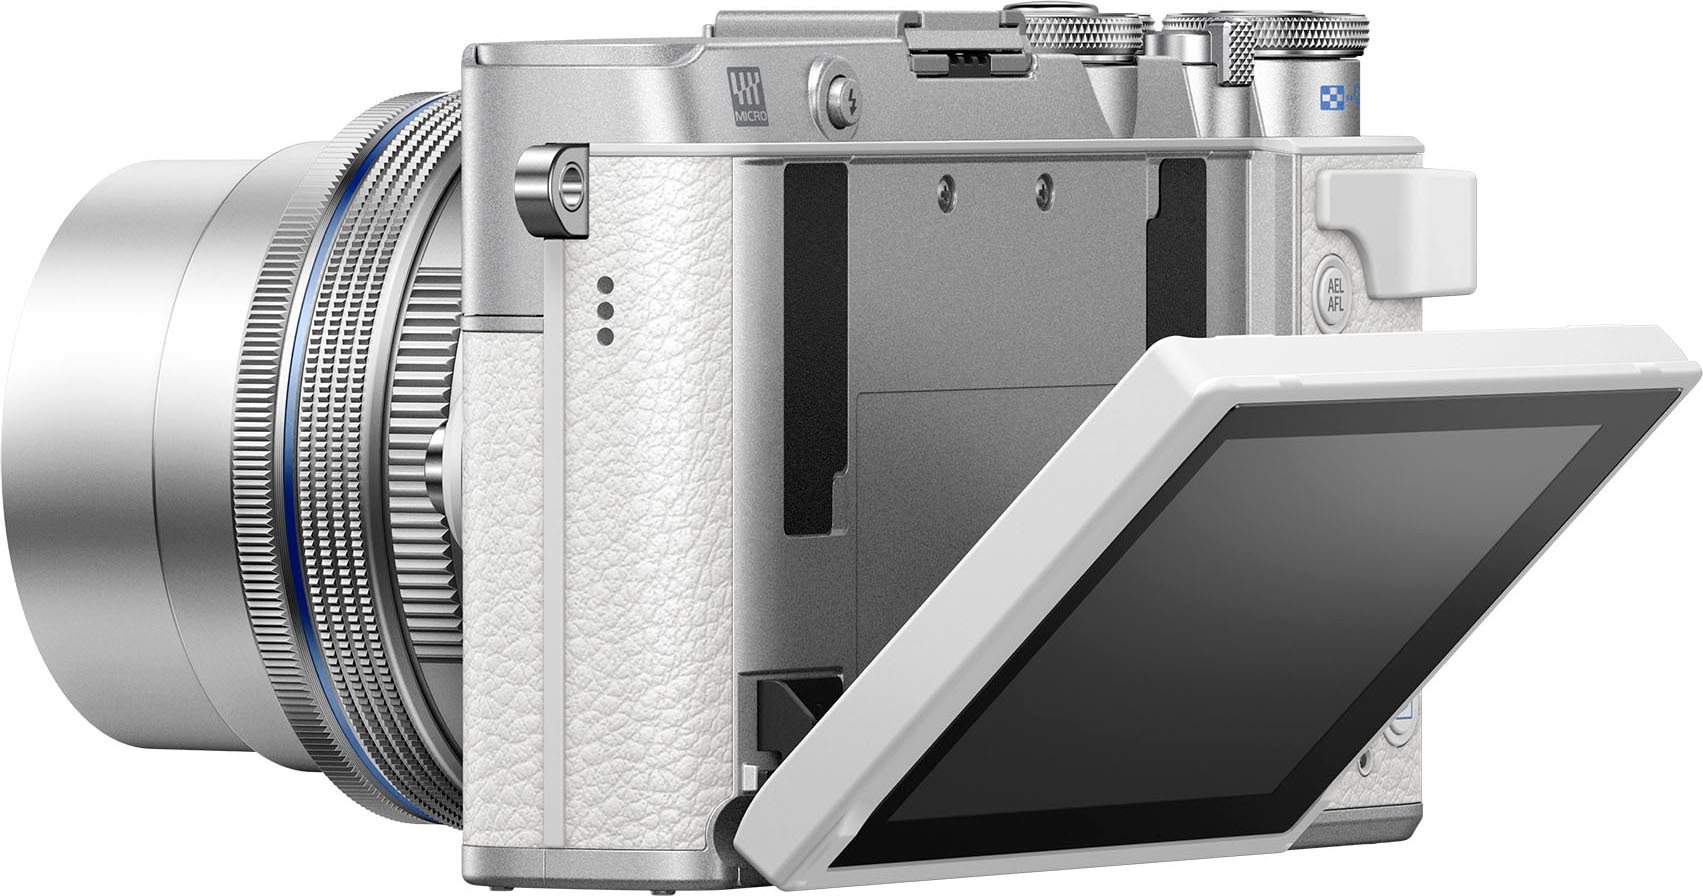 Olympus Systemkamera »E‑P7«, M. Zuiko Digital ED 14-42mm F3.5-5.6 EZ  Pancake, 20,3 MP, 3 fachx opt. Zoom, WLAN-Bluetooth auf Raten bestellen